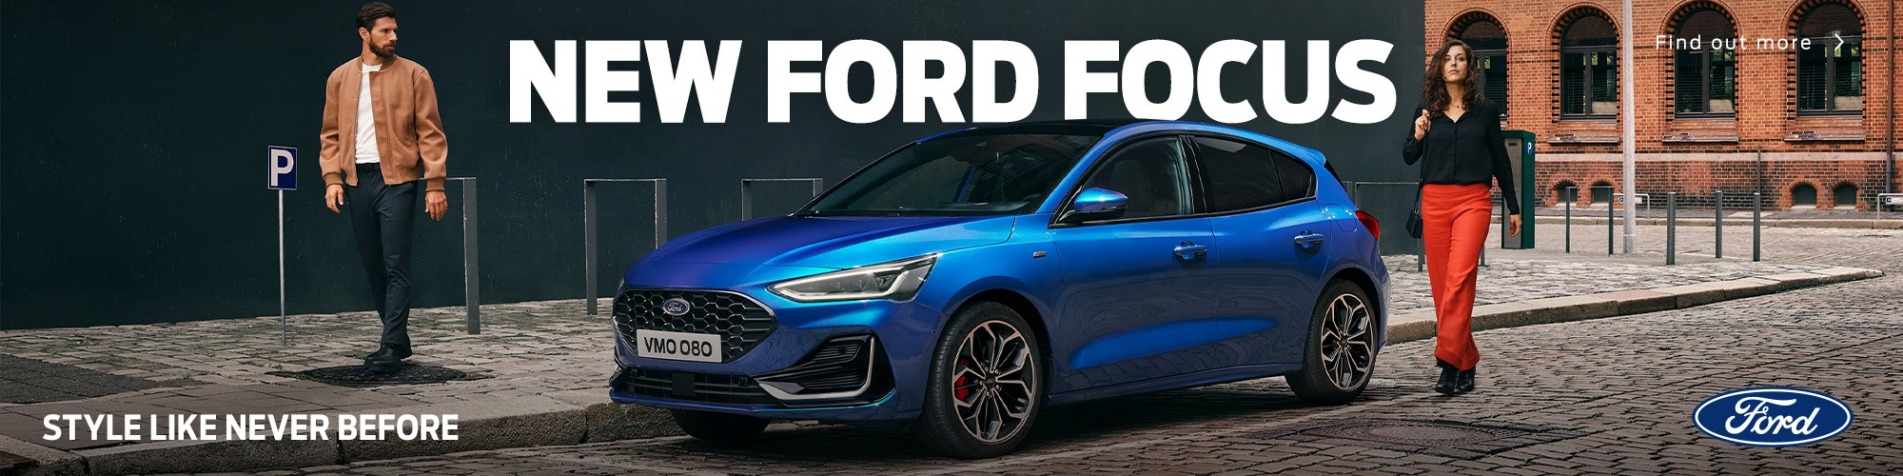 Ford Focus Banner